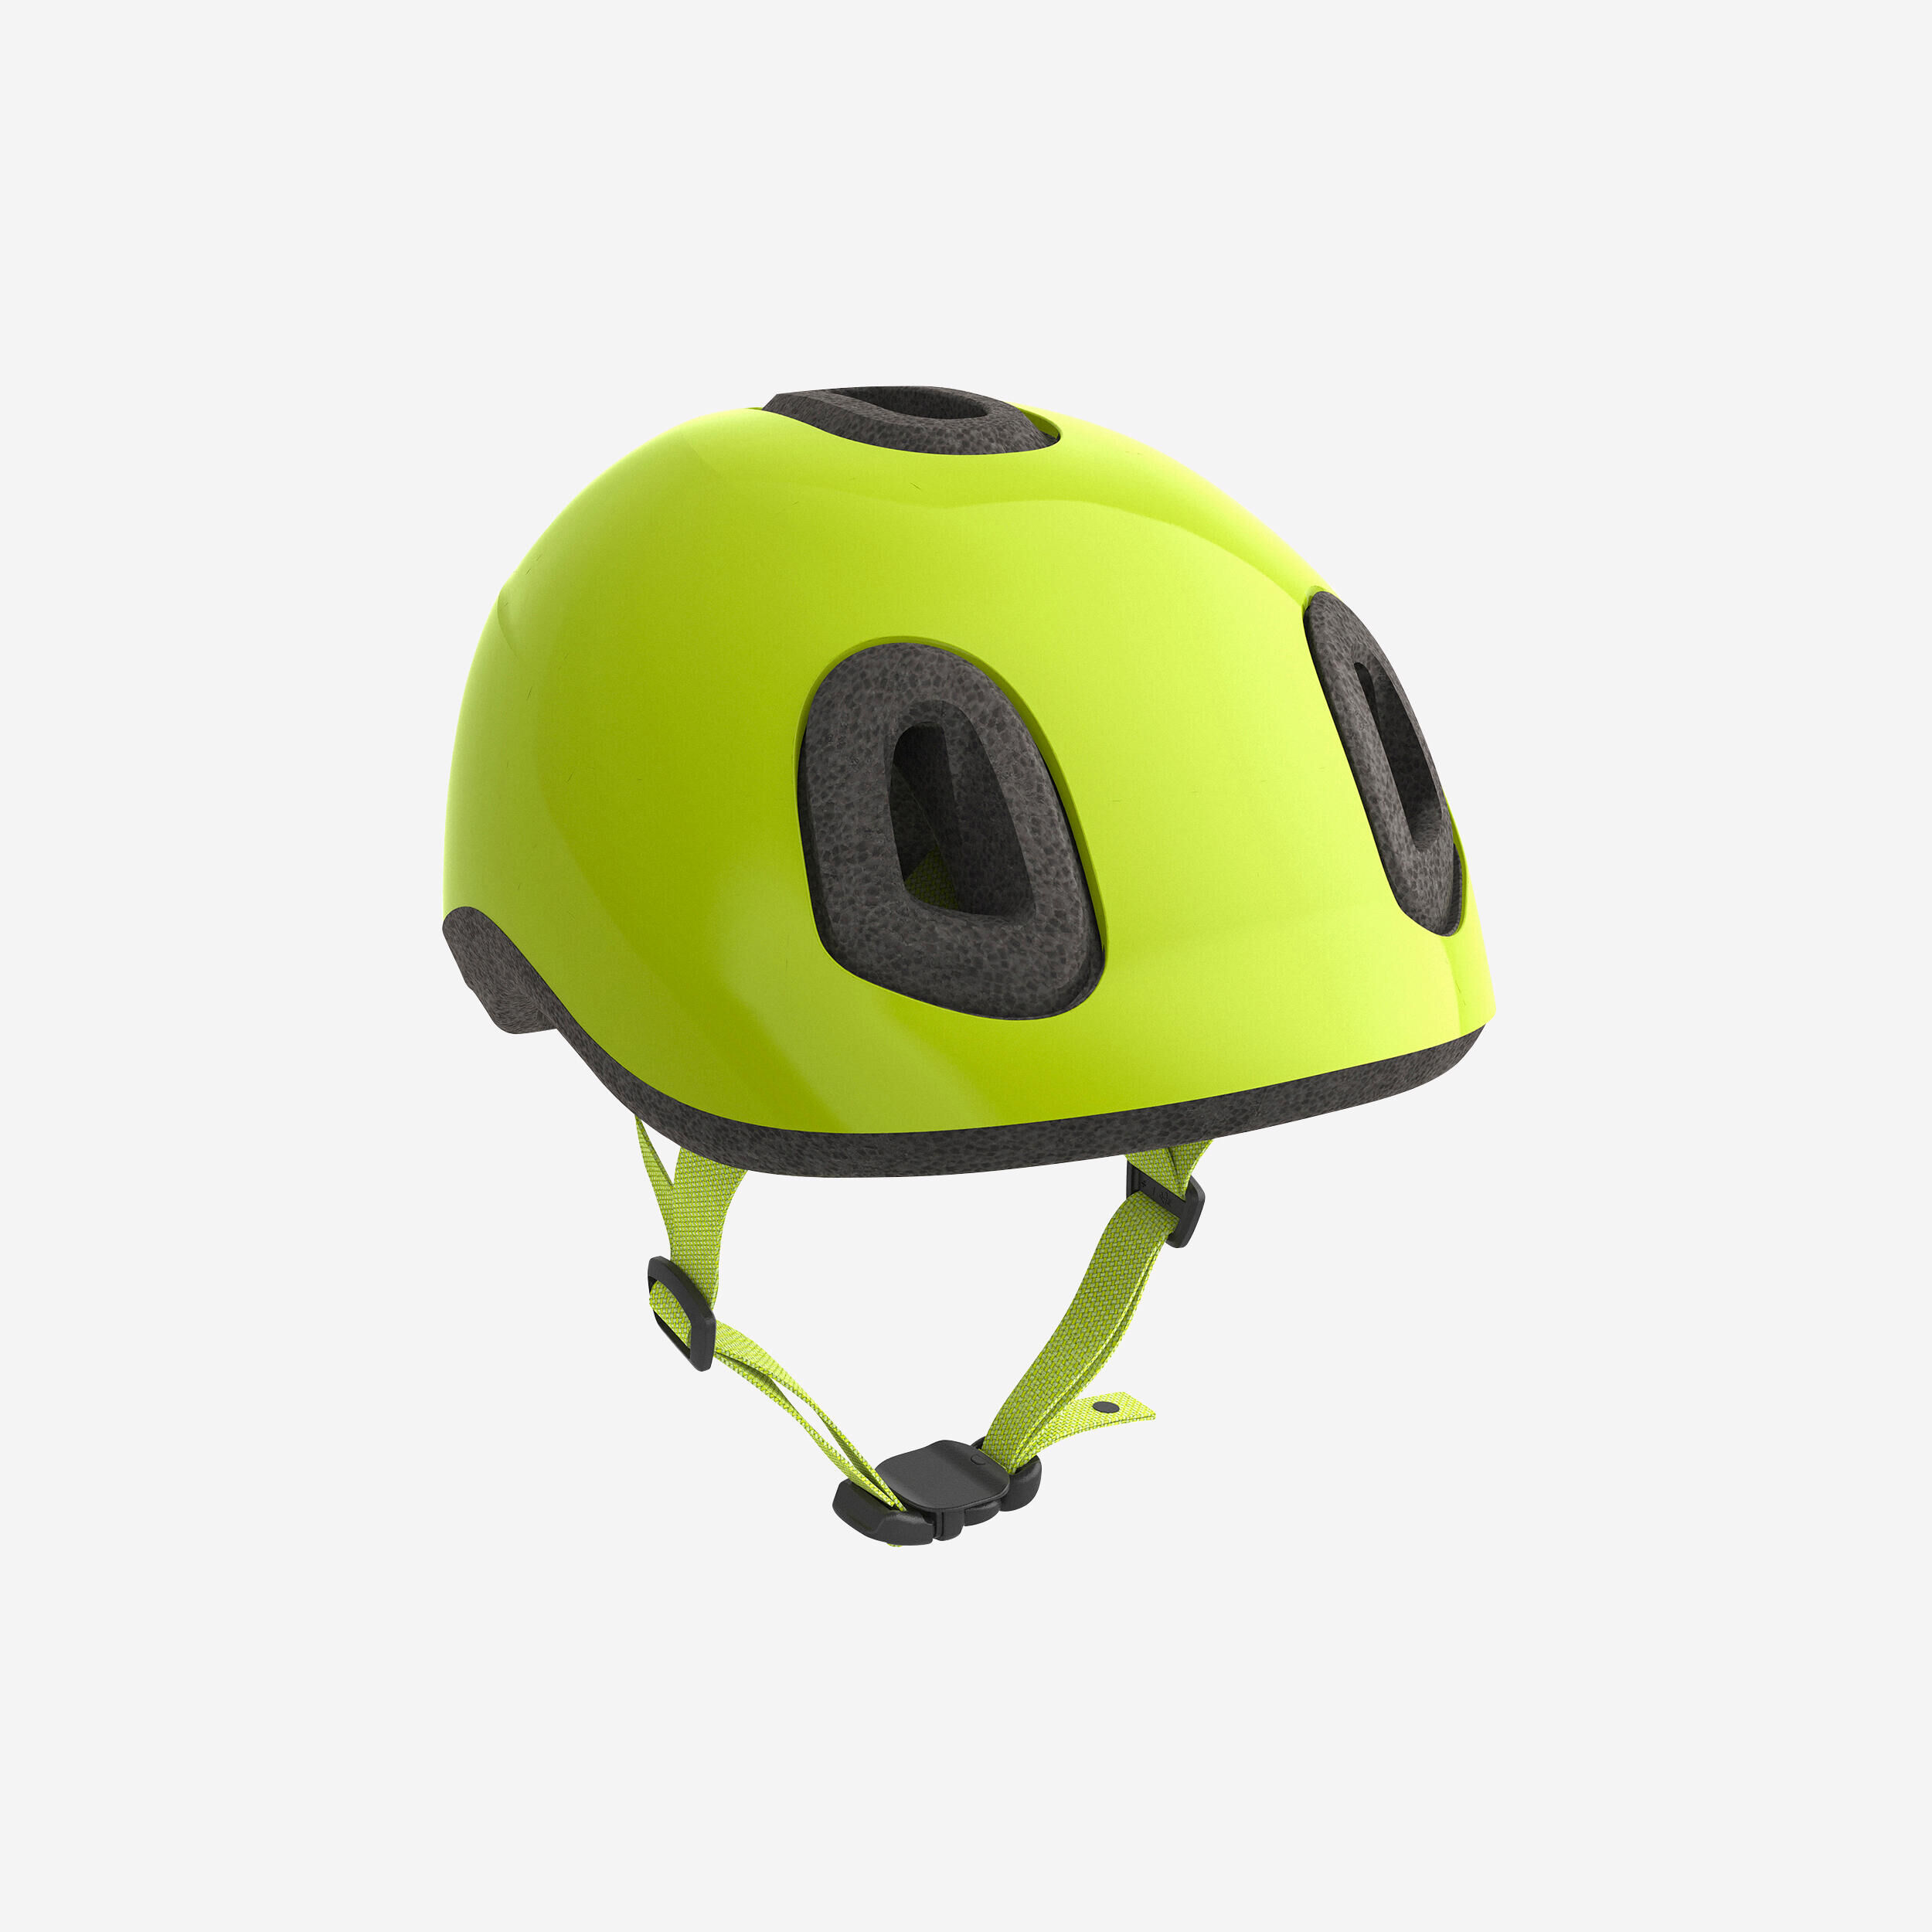 BTWIN Baby Cycling Helmet 500 - Neon